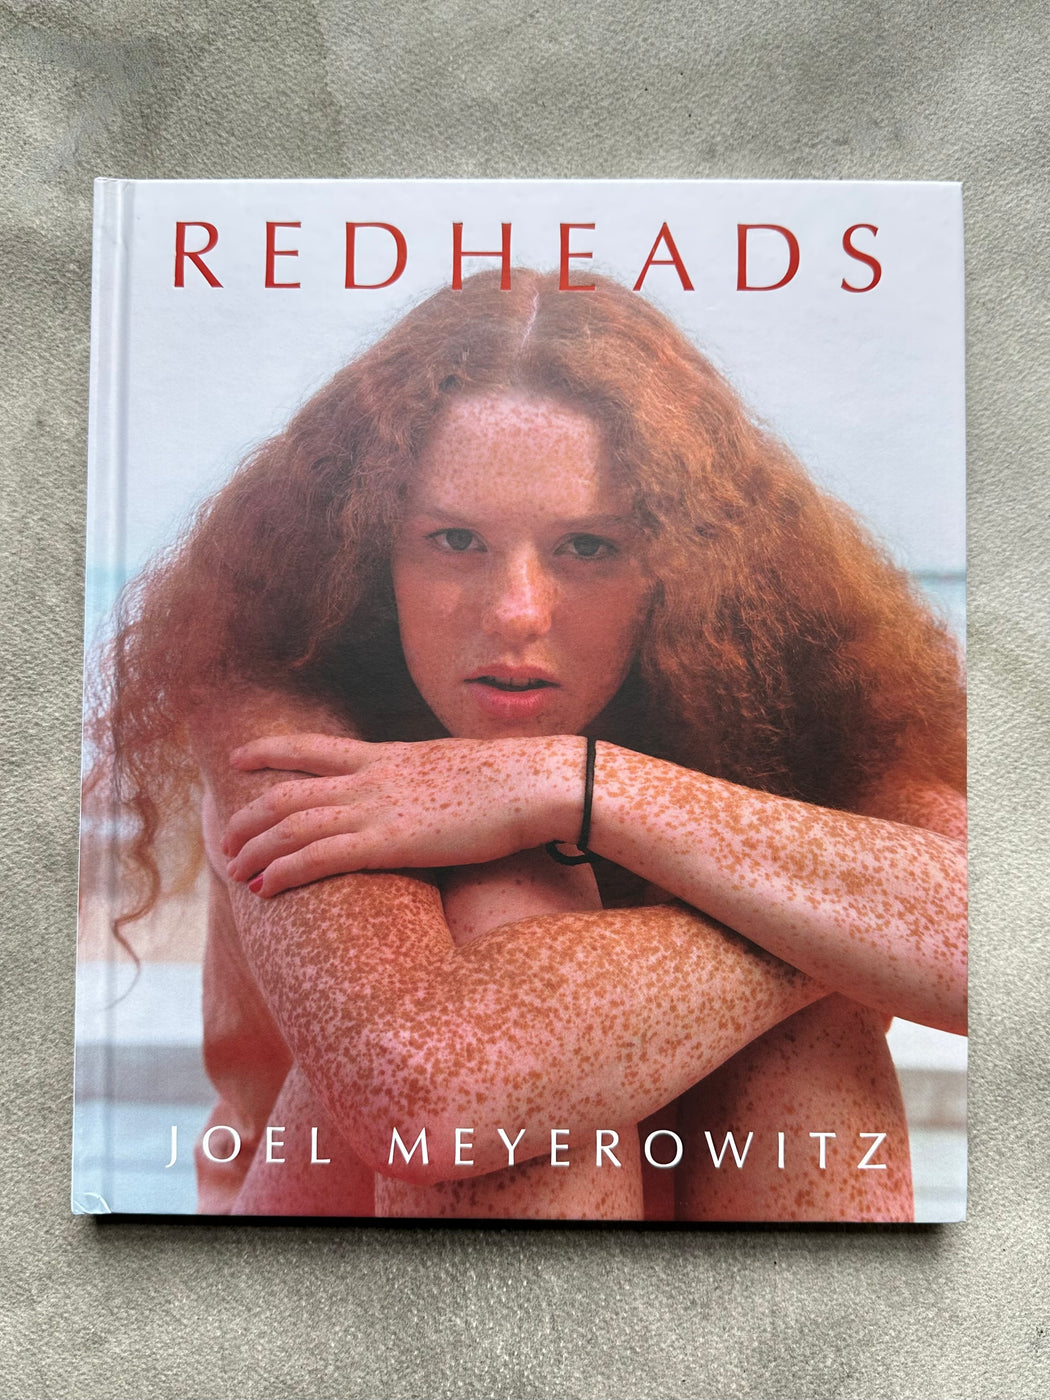 "Redheads" by Joel Meyerowitz